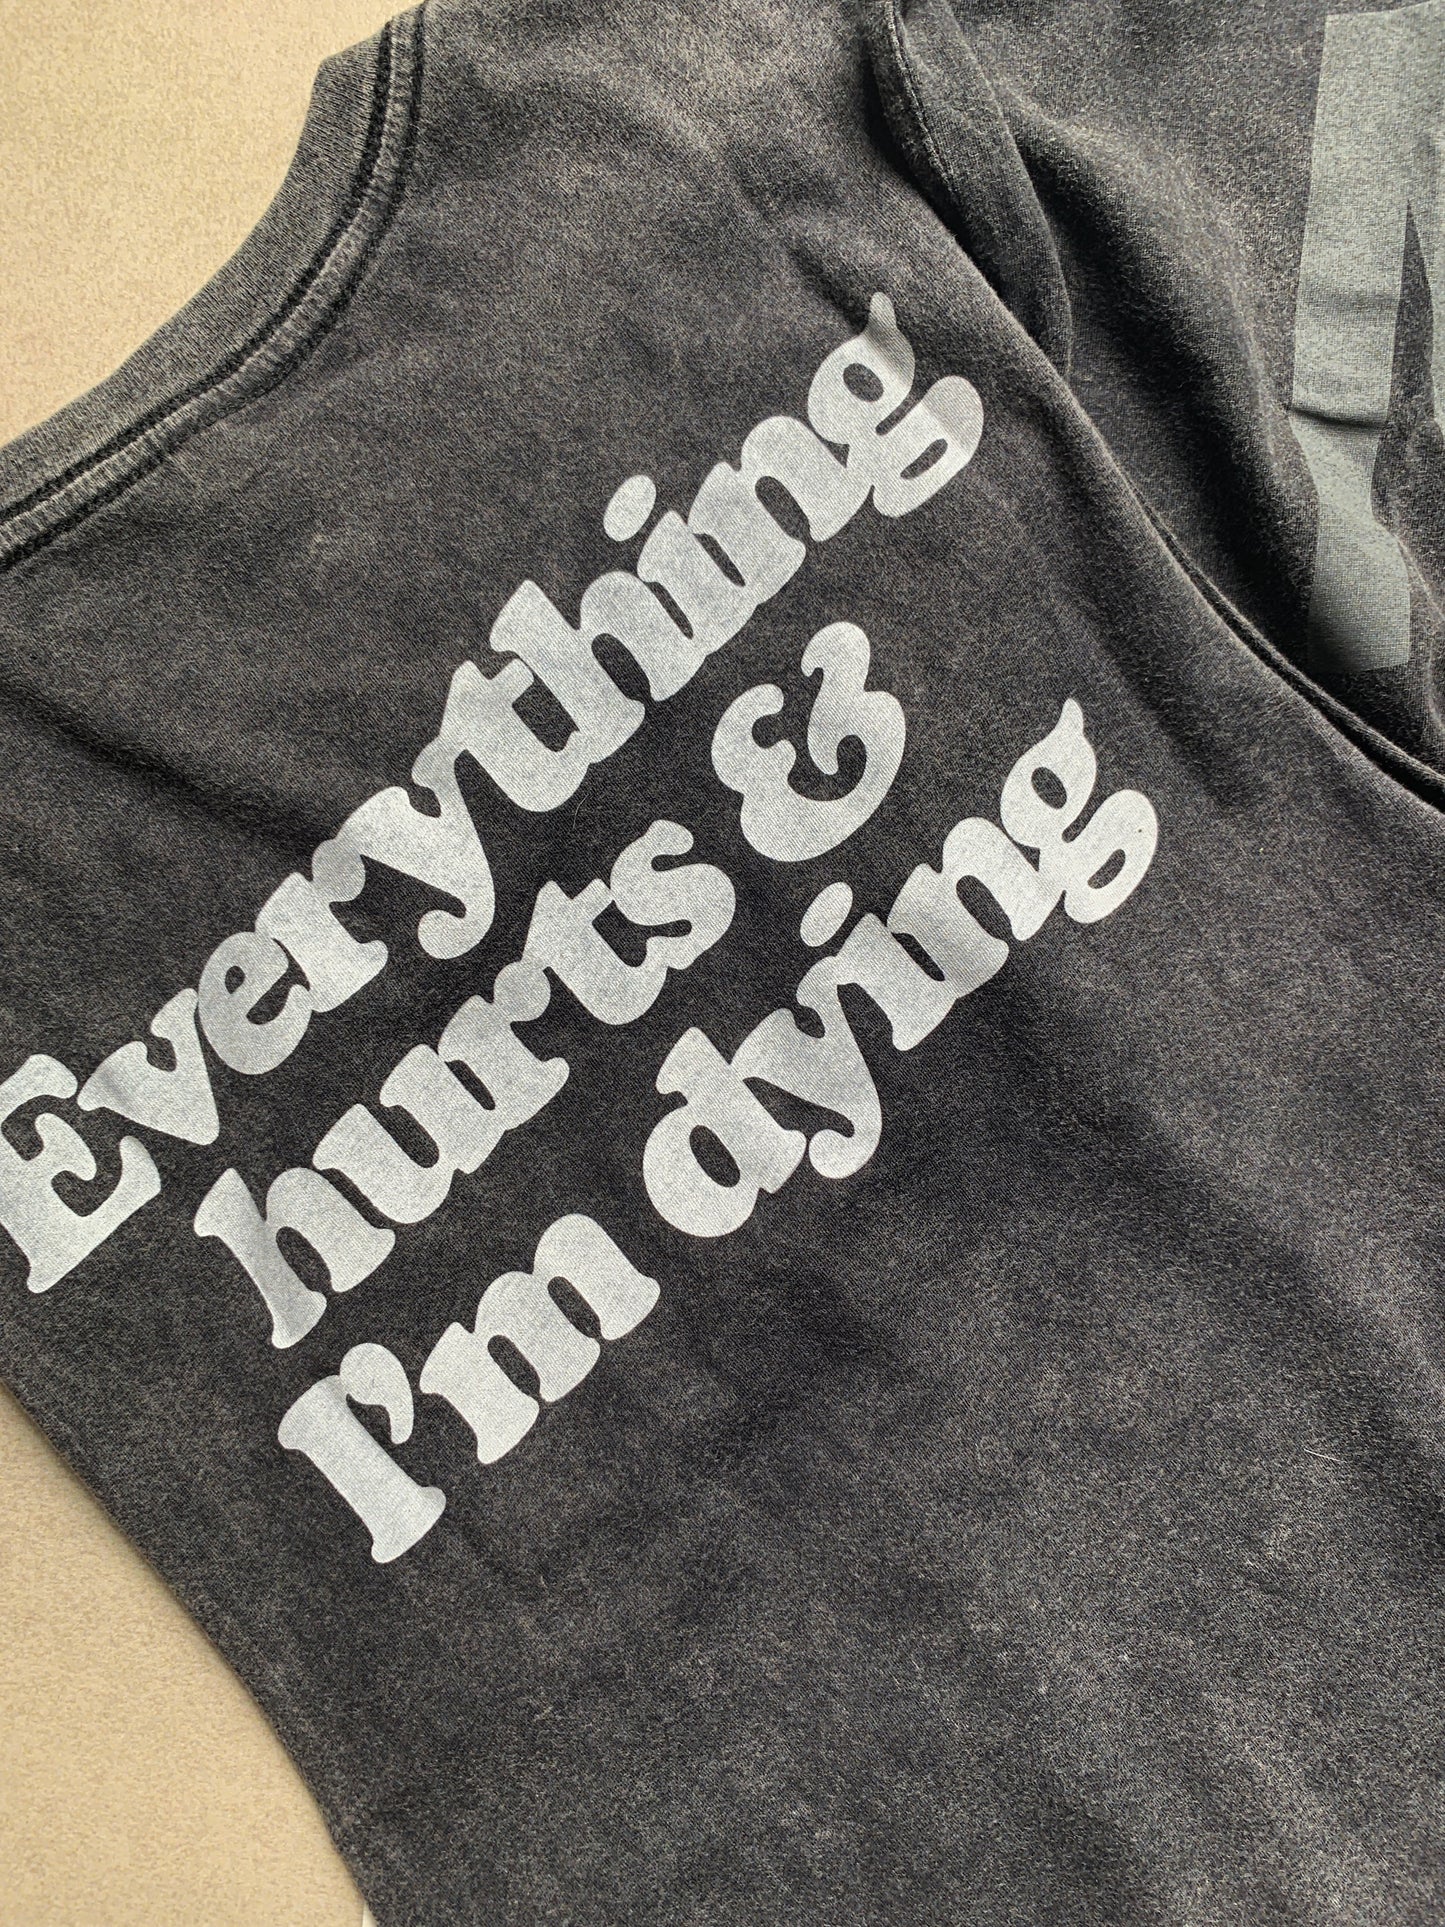 Everything hurts T-shirt